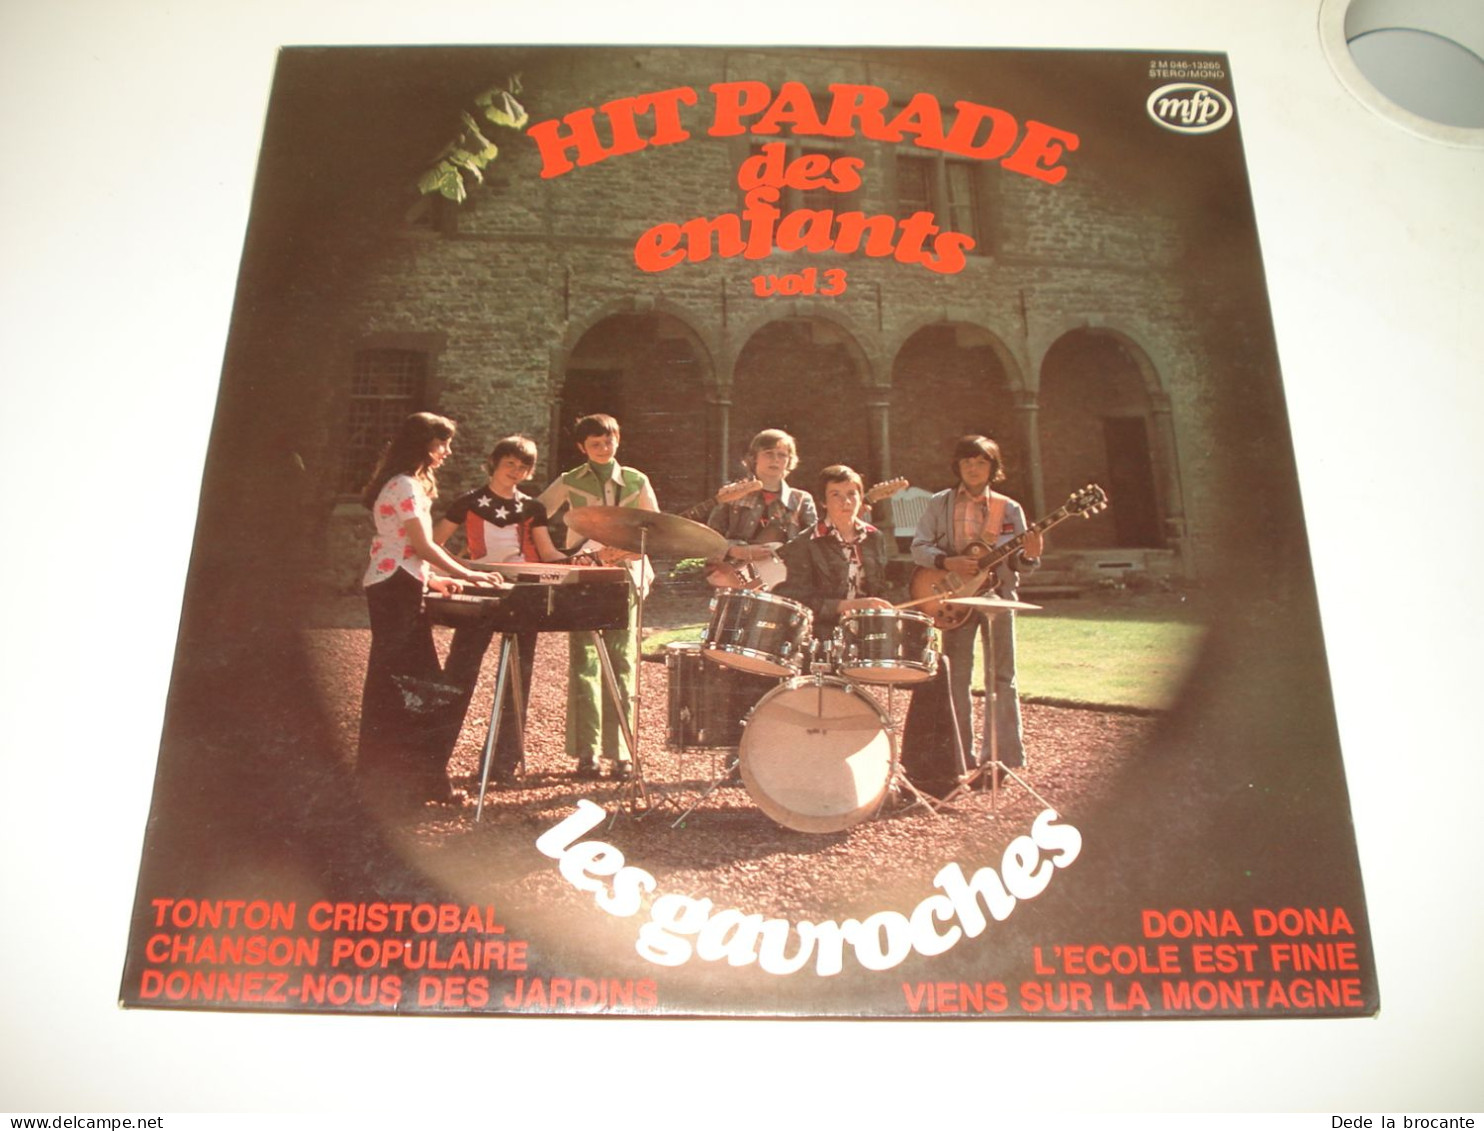 B14 / Les Gavroches – Hit-Parade Enfant 3 – LP -  2 M 046-13265 - BE  1975  M/EX - Bambini